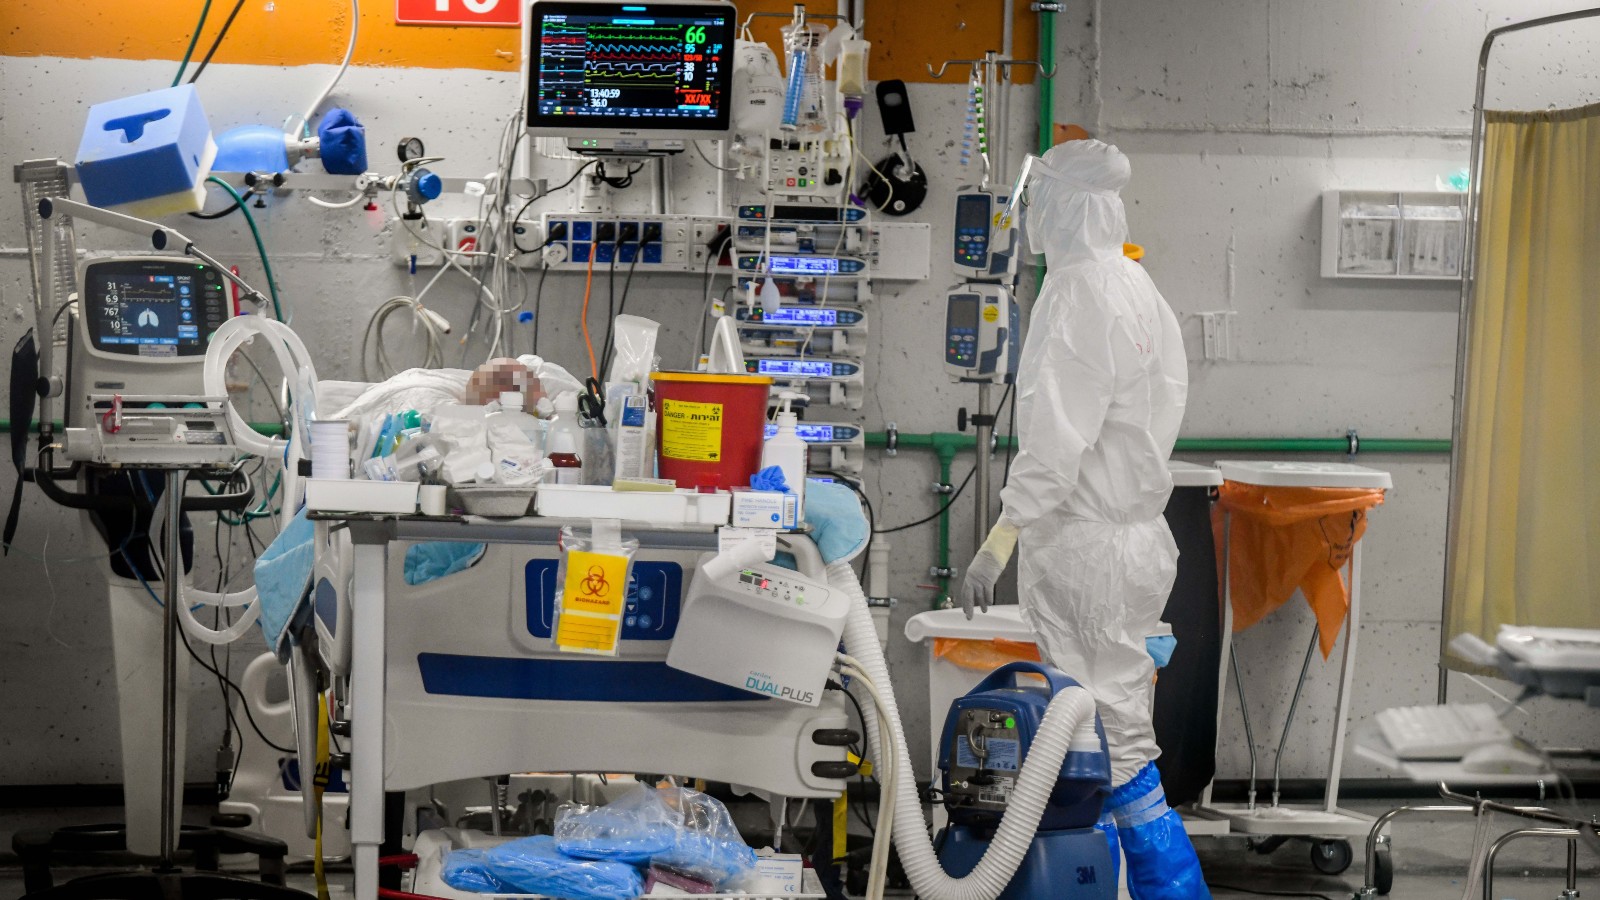 Coronavirus isolation ward of Sheba Medical Center in Ramat Gan, July 20, 2020. Photo by Yossi Zeliger/Flash90